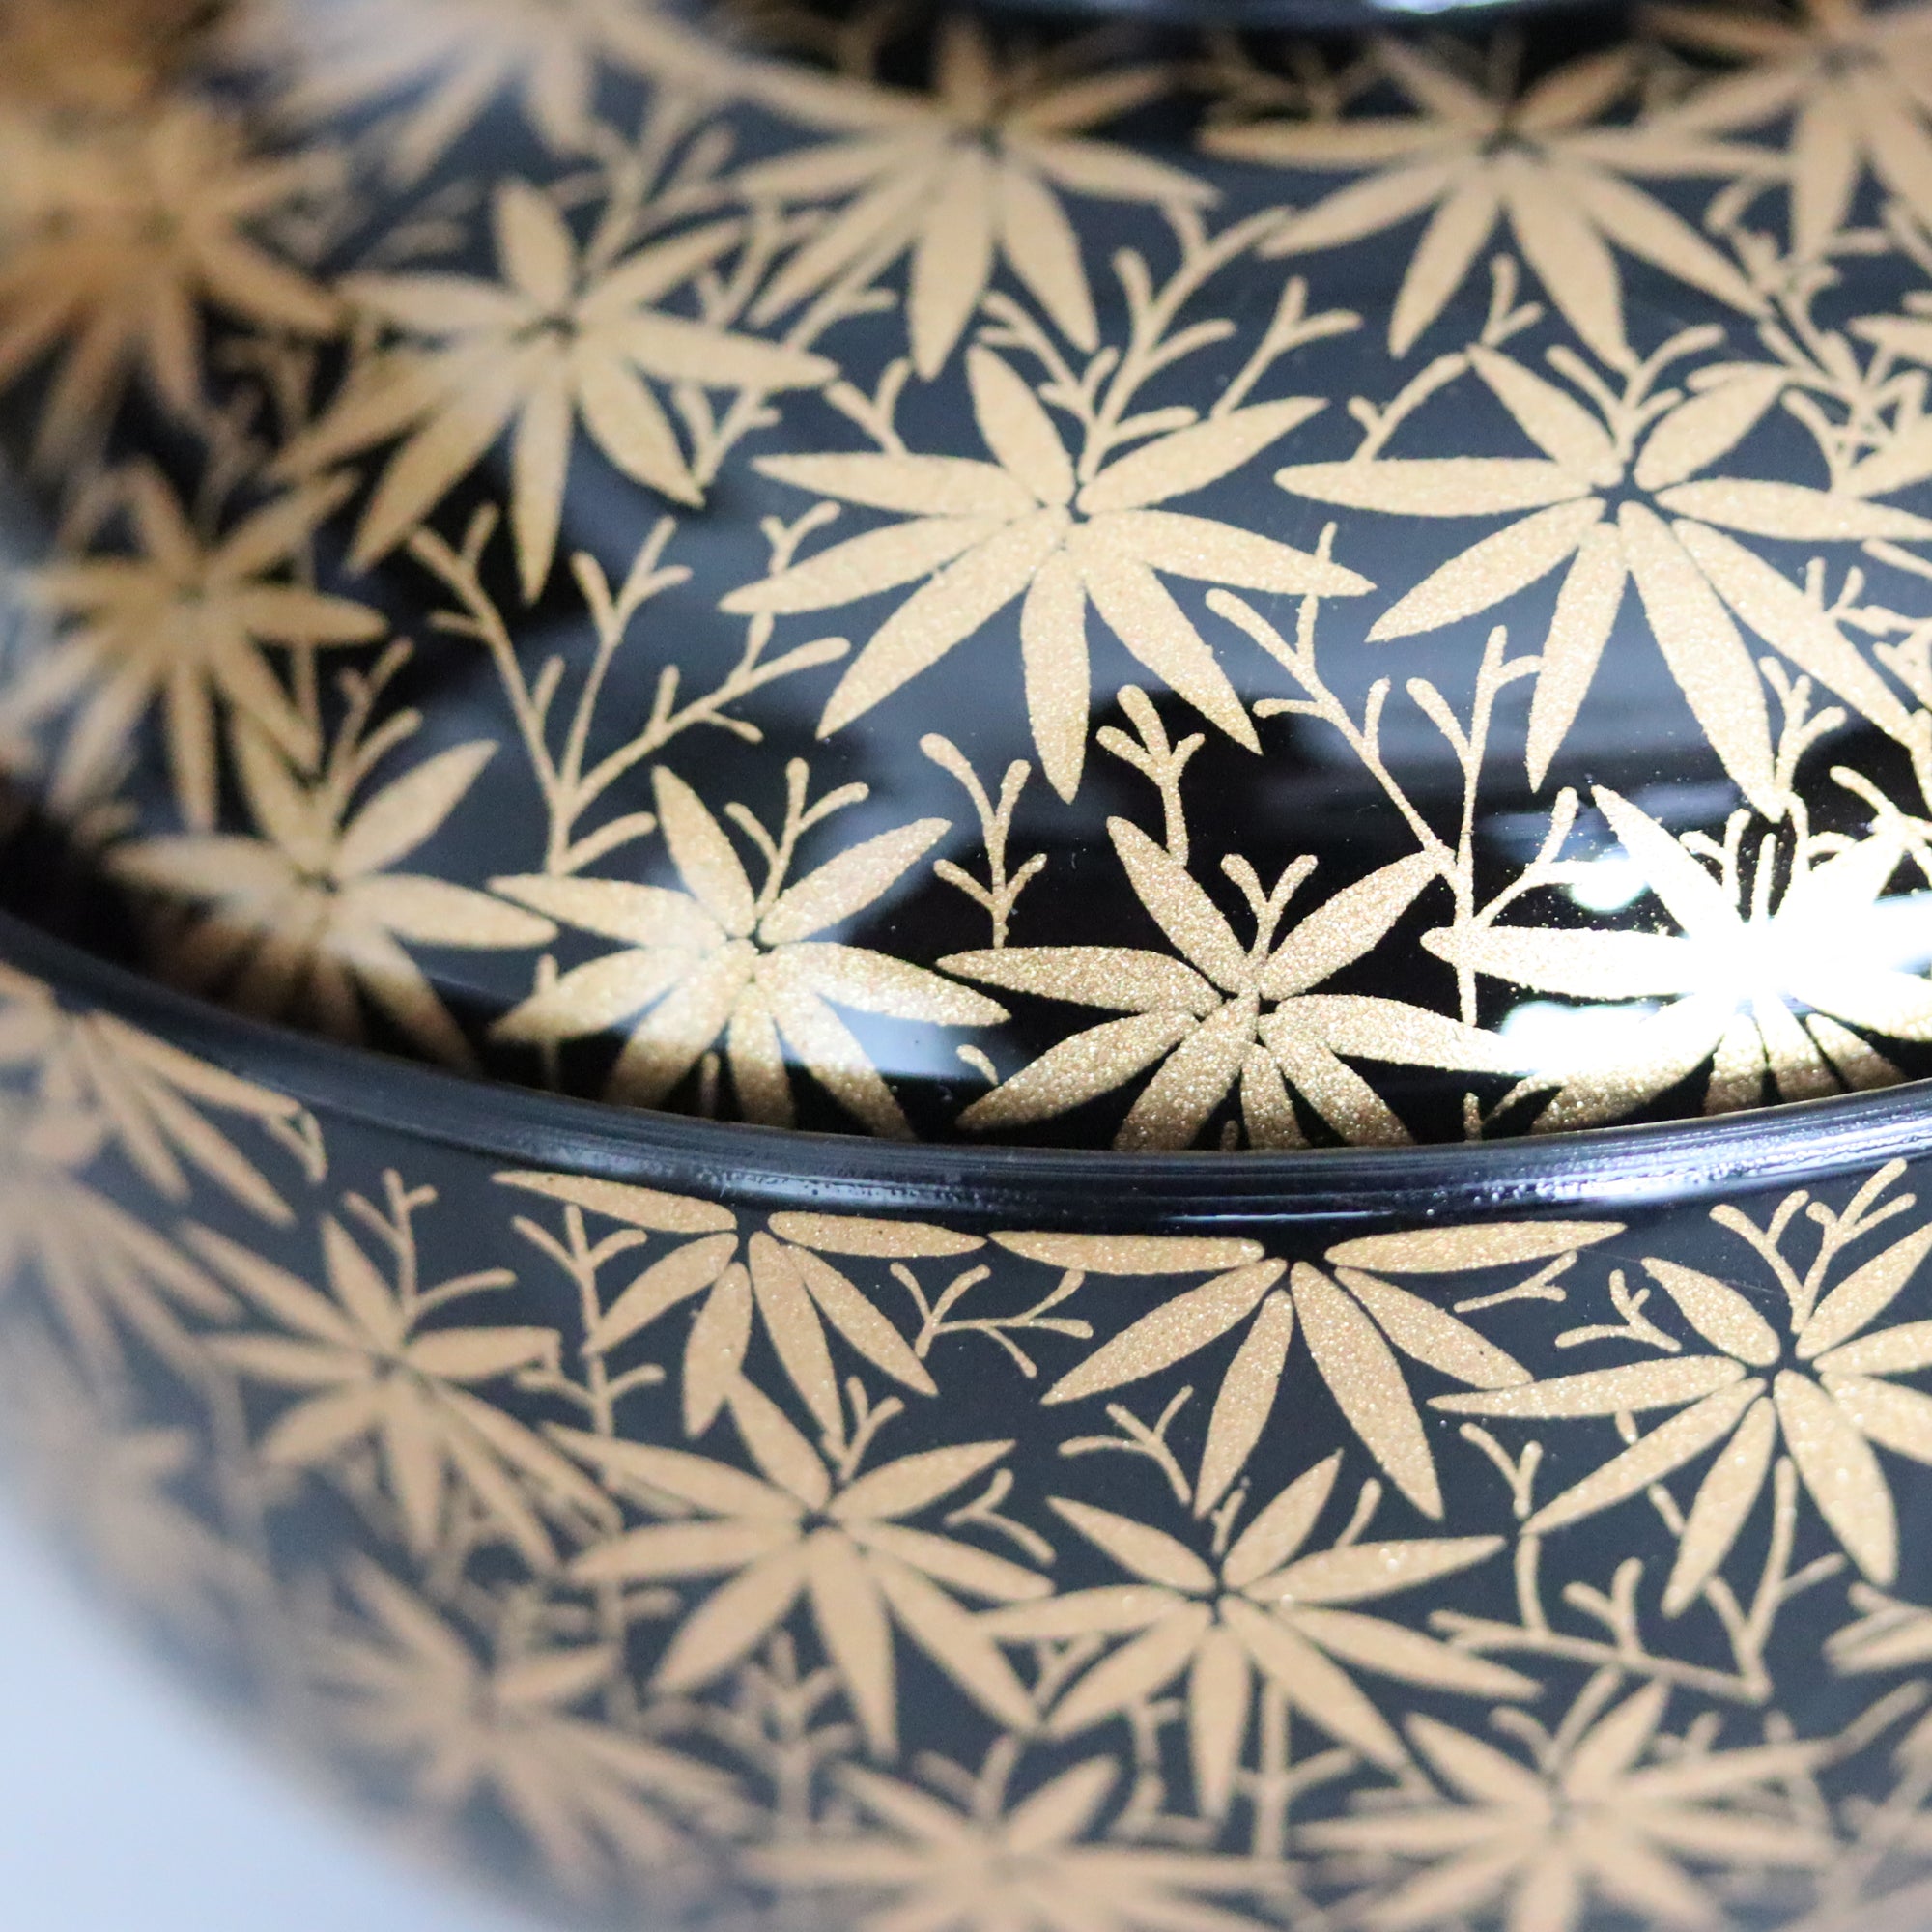 Black bamboo grass patterned Sensai bowl